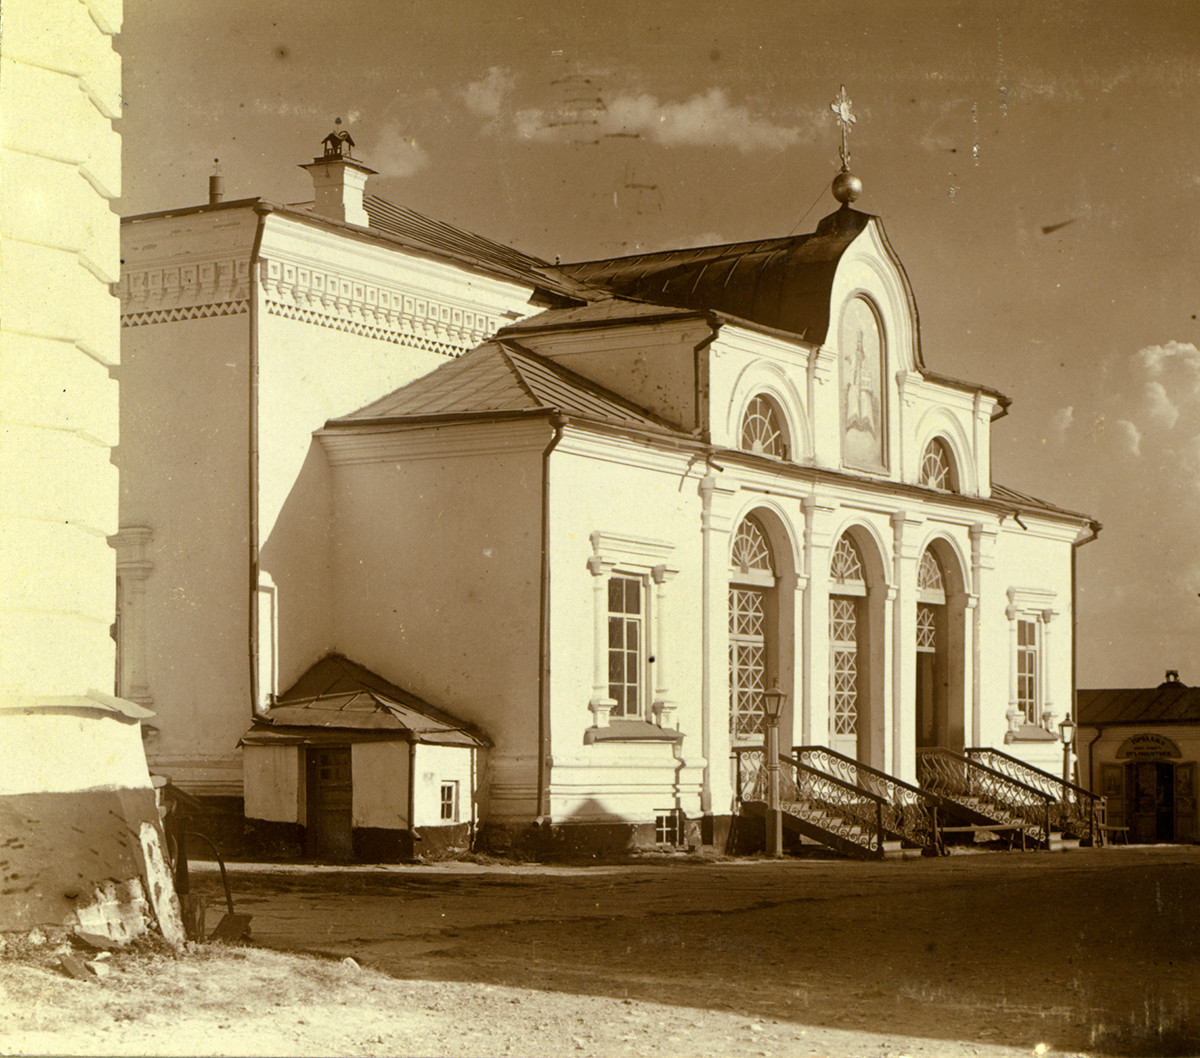 St. Nicholas Church, northwest view. Demolished, rebuilt in different form in 1998. Summer 1909.